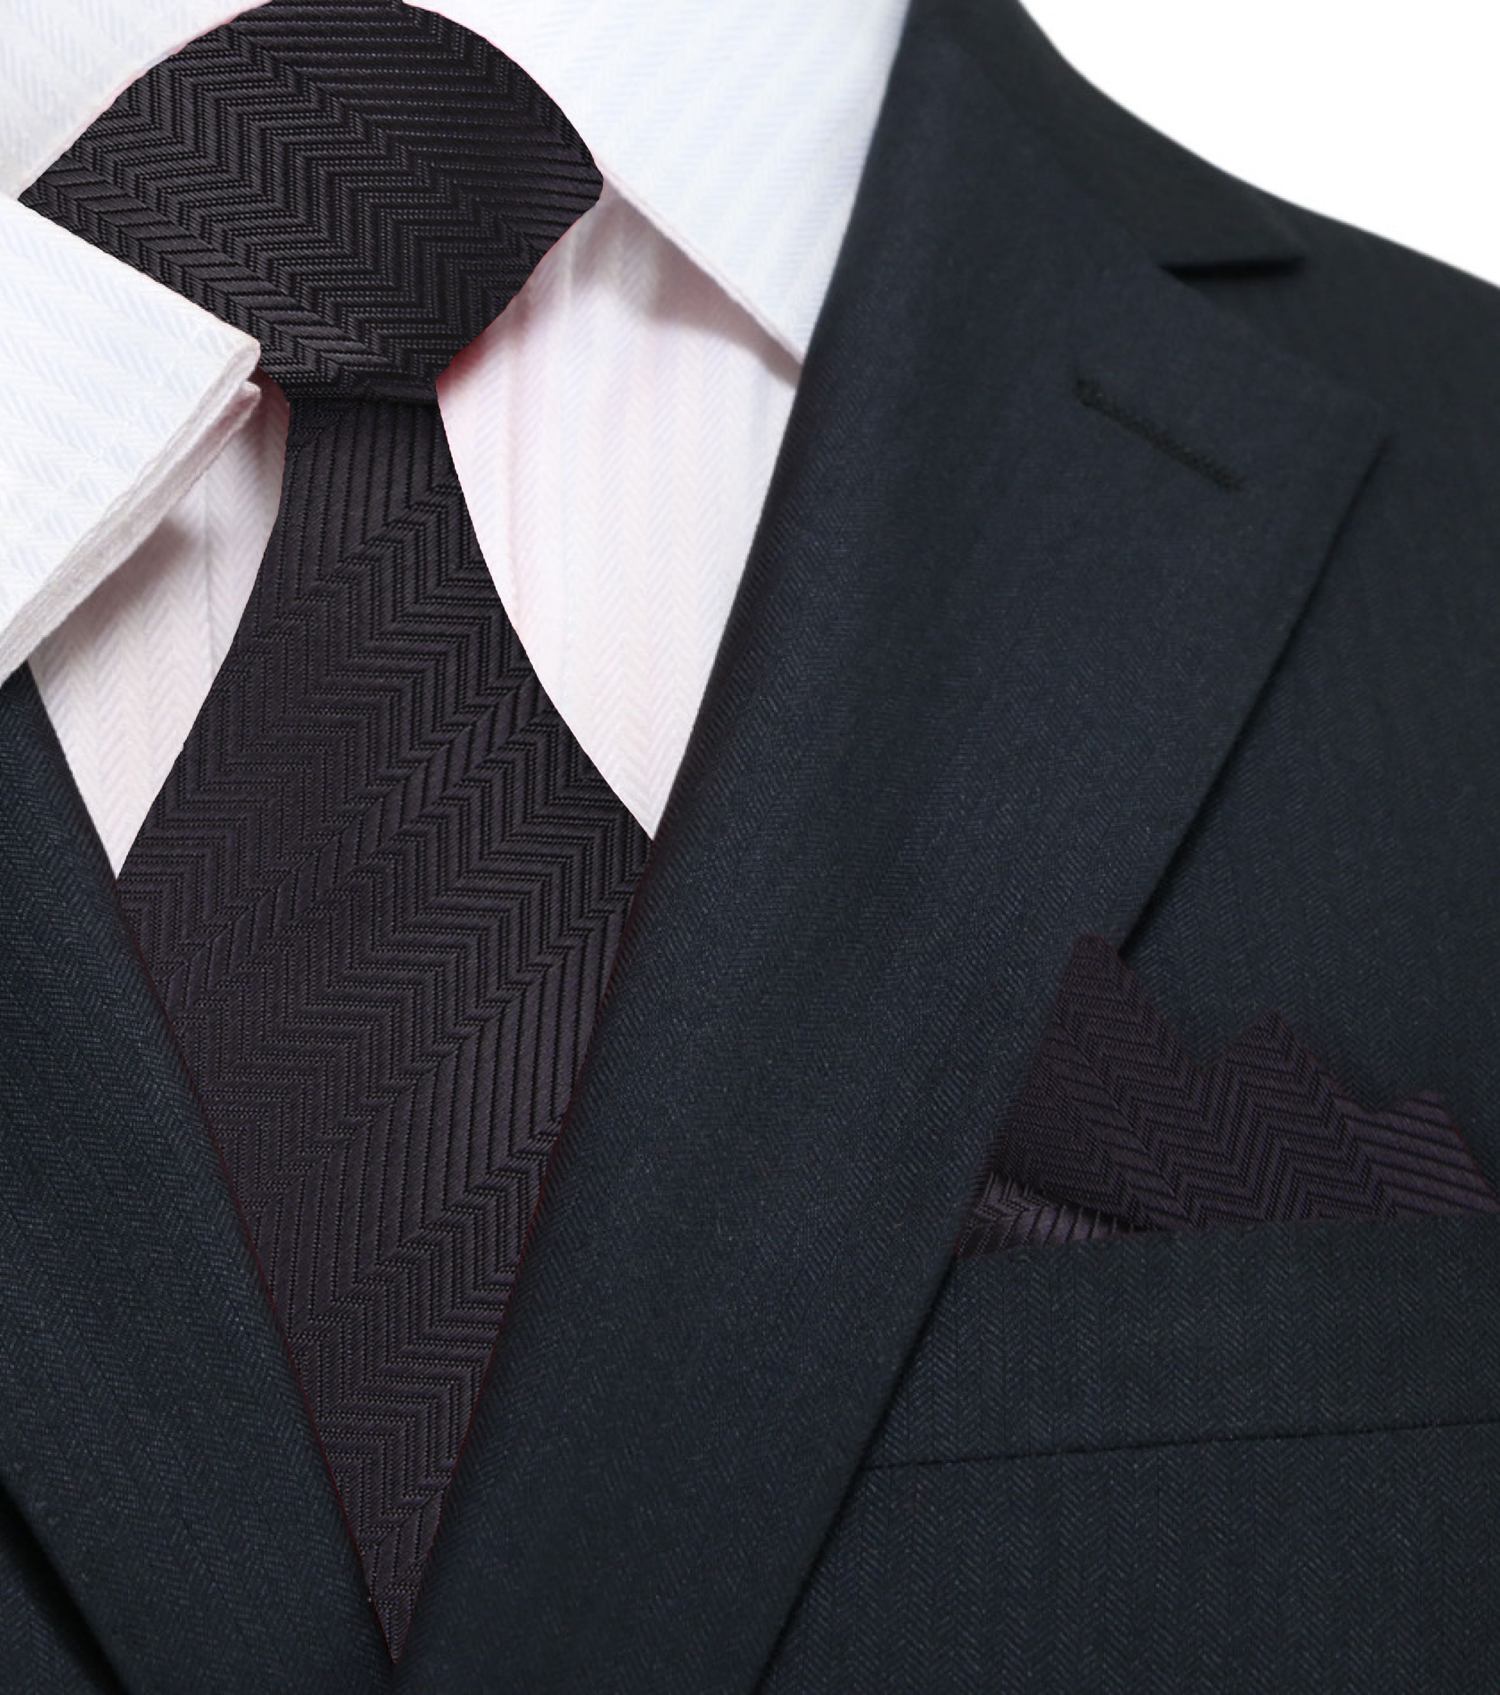 A Solid Graphite Shadow Pattern Silk Necktie, Matching Pocket Square||Graphite Shadow